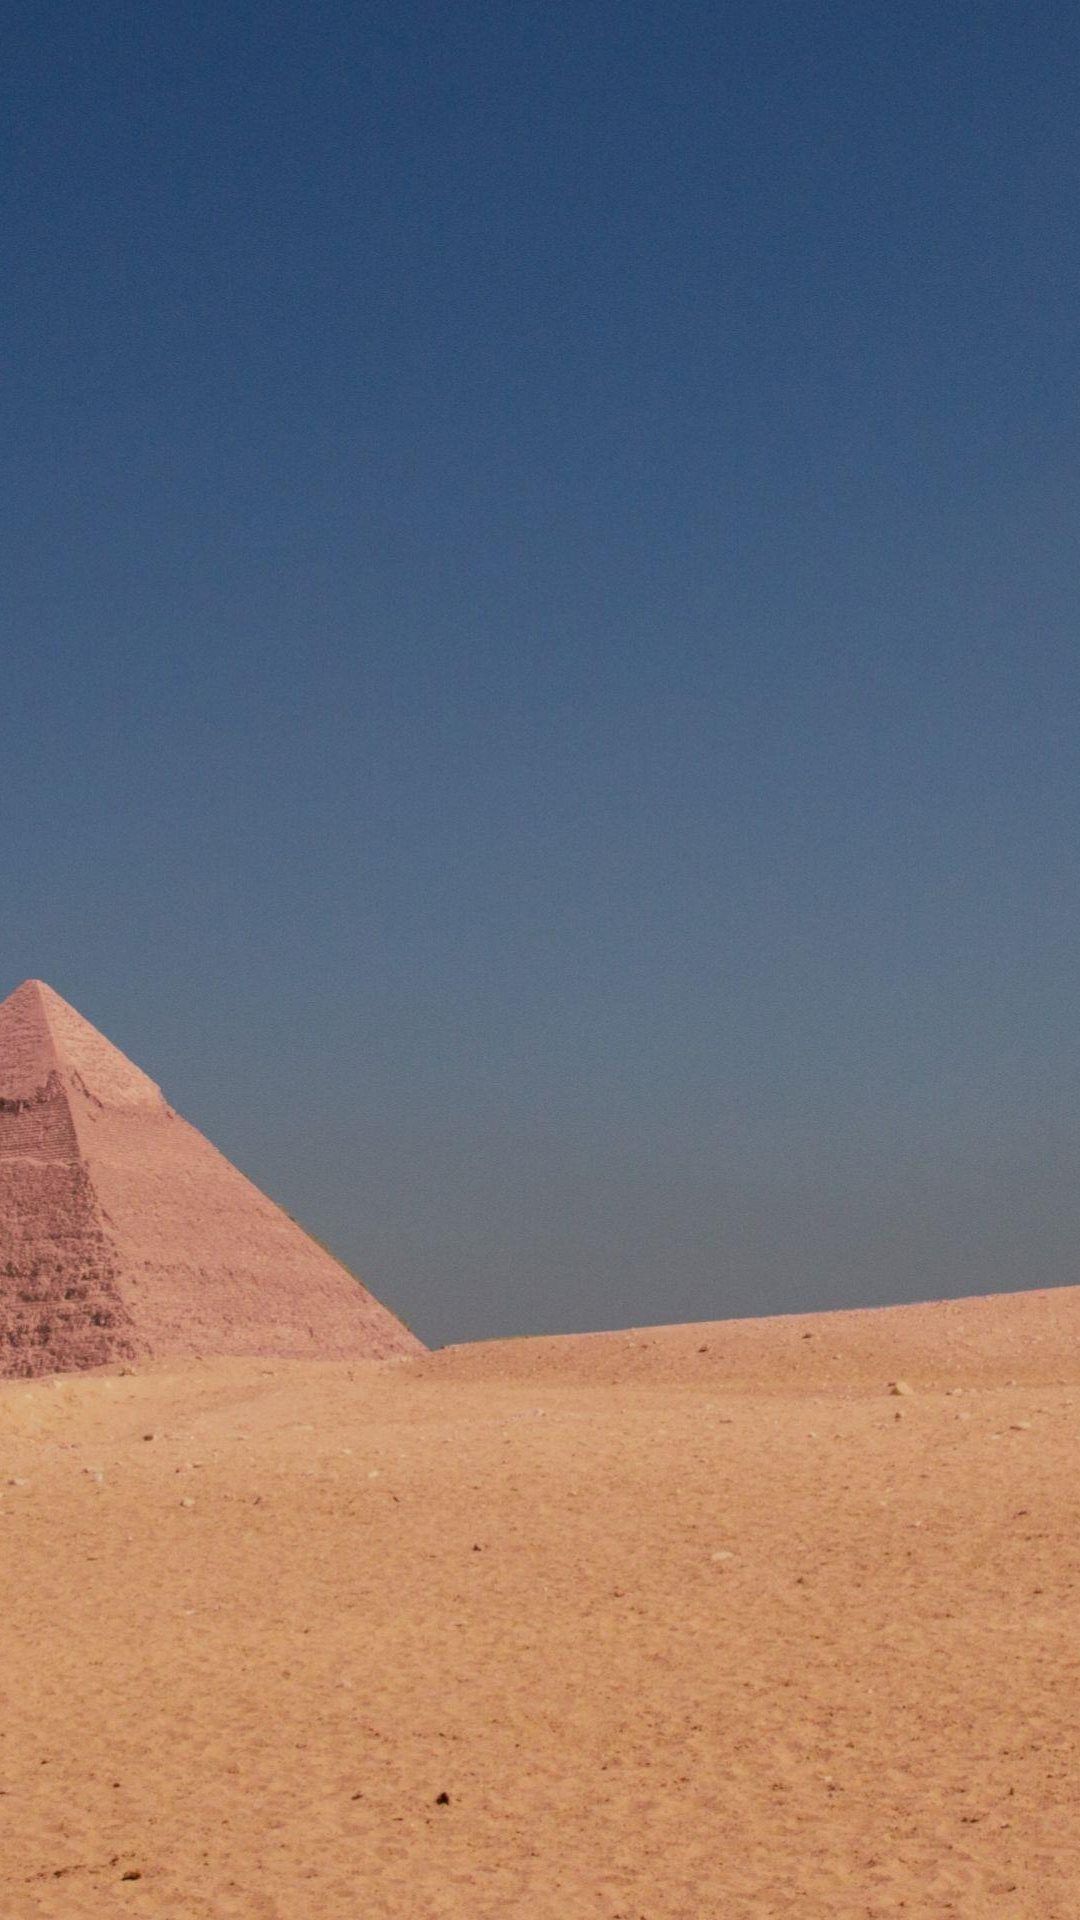 Egipt Pyramid Blue Sky iPhone 8 Wallpaper Free Download